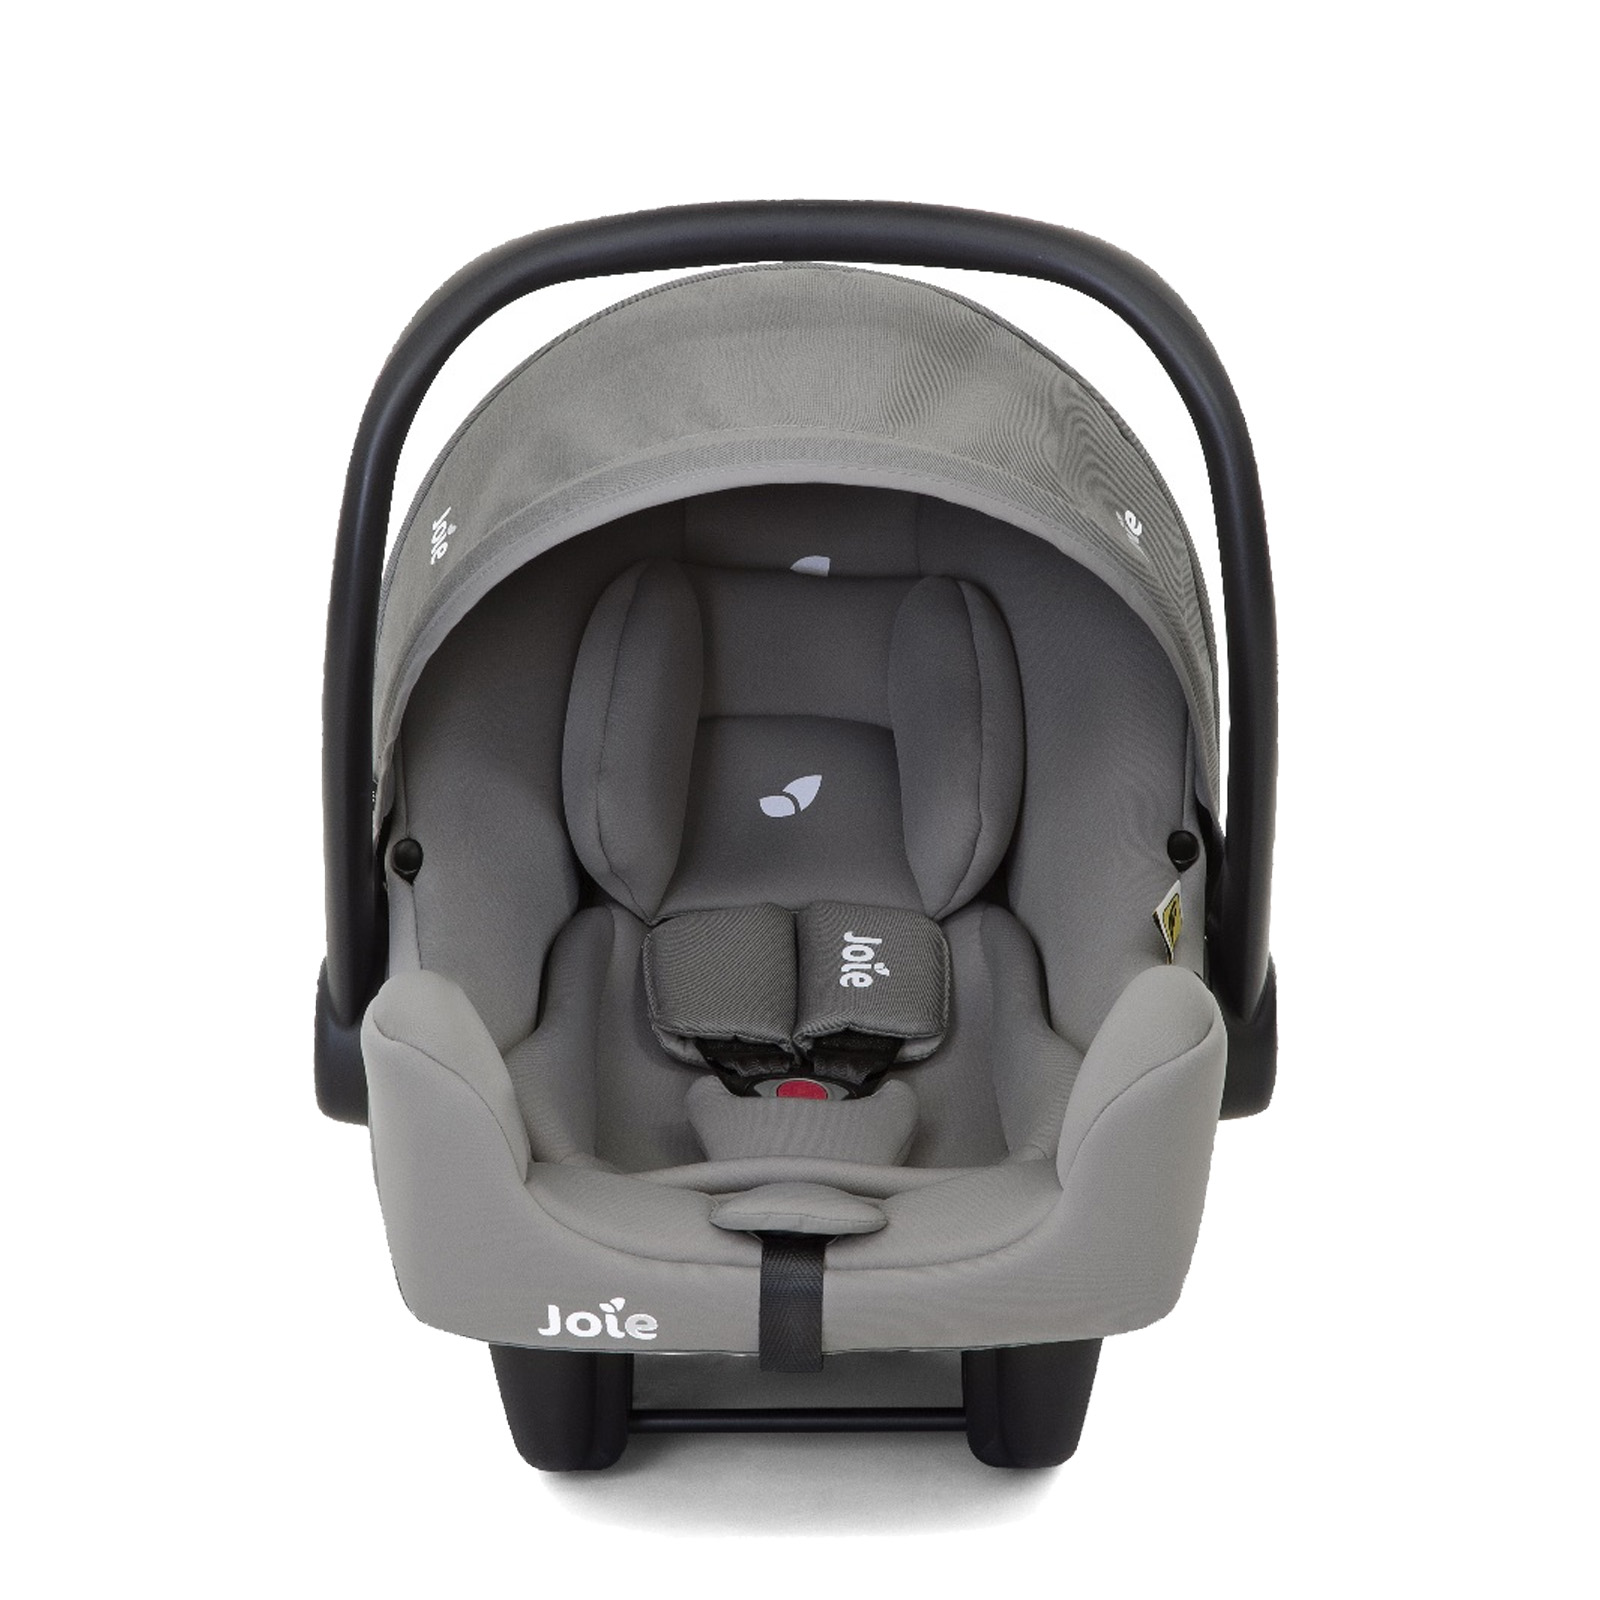 Joie i-Snug 2 Group 0+ Infant Carrier Car Seat - Grey Flannel (0-12 Months)